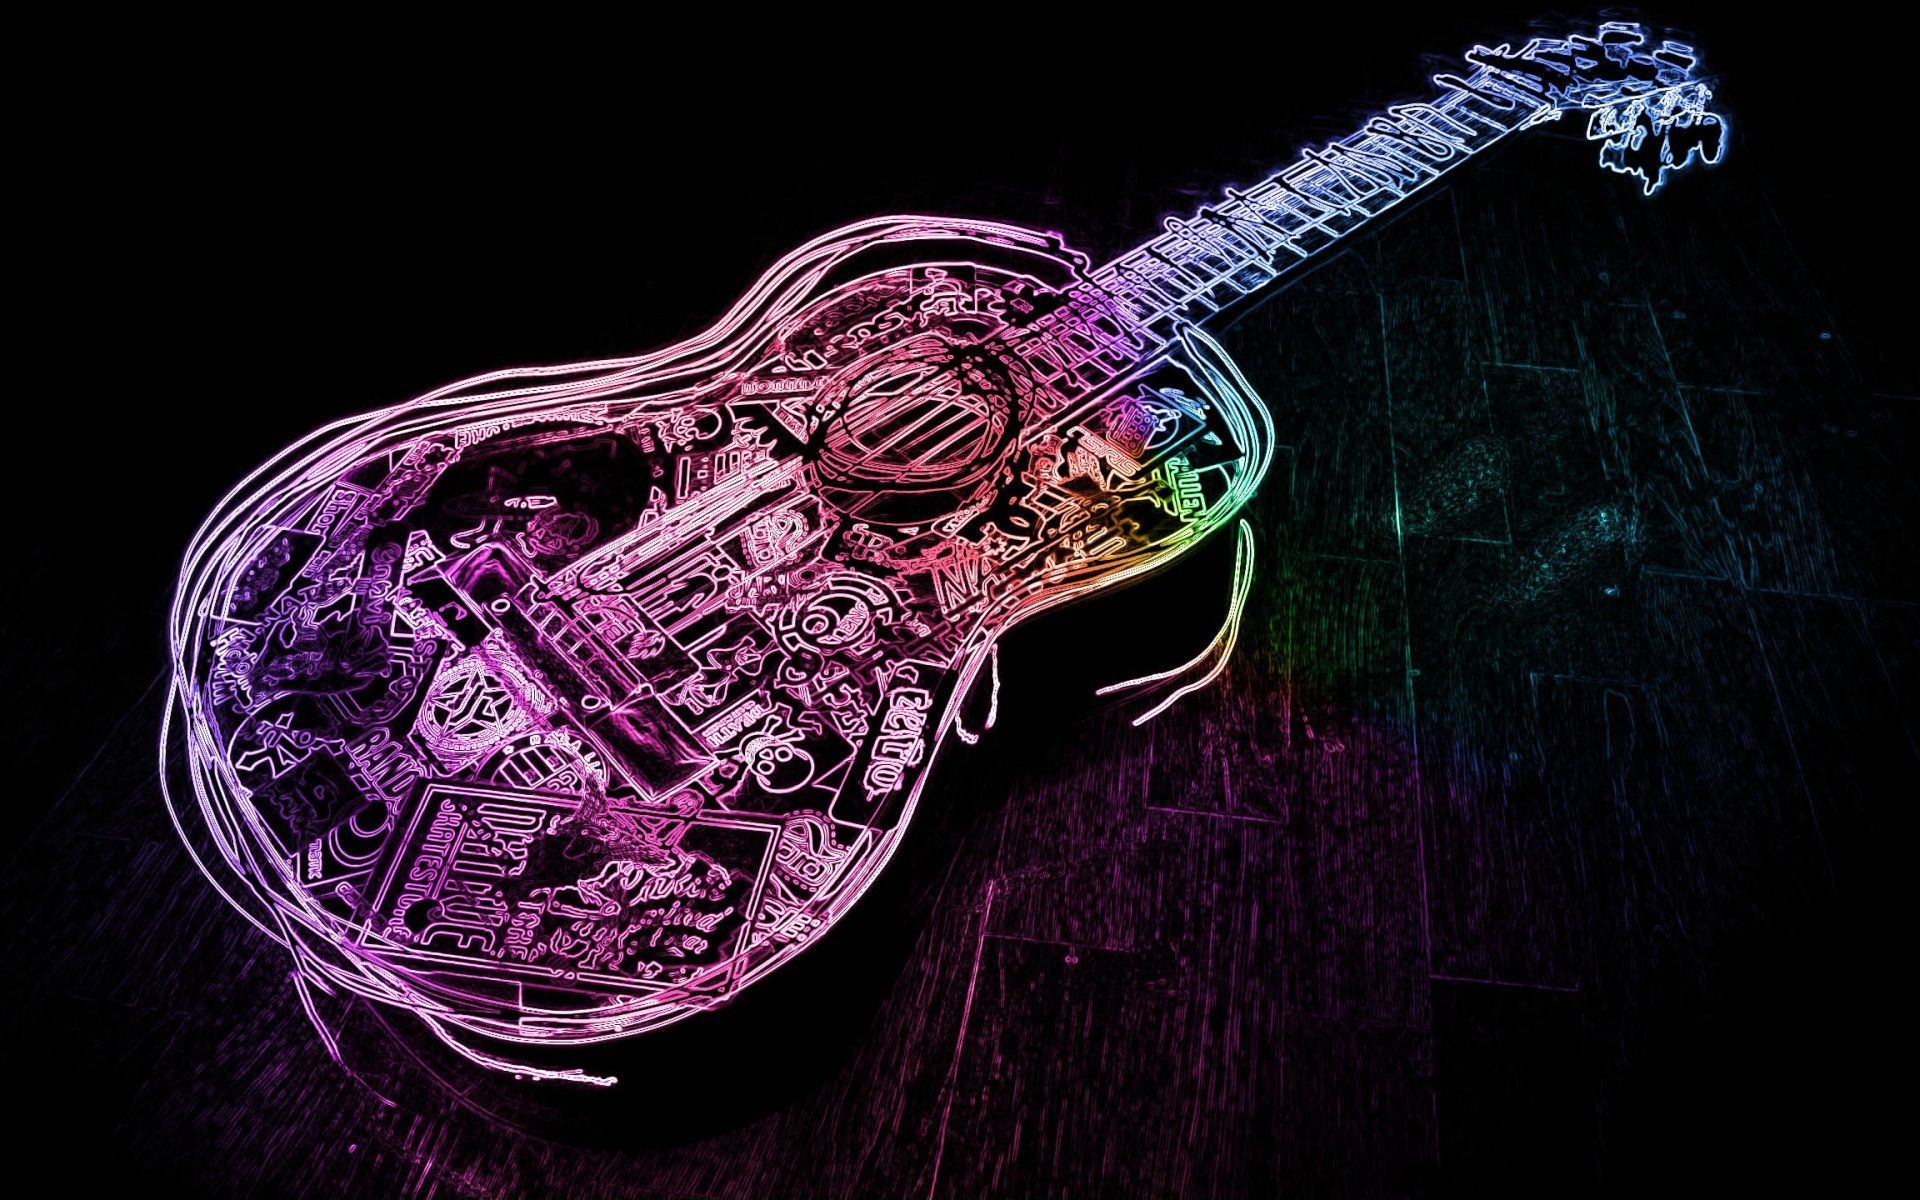 Guitar Desktop Wallpaper |Guitar Desktop Backgrounds | Cool Wallpapers